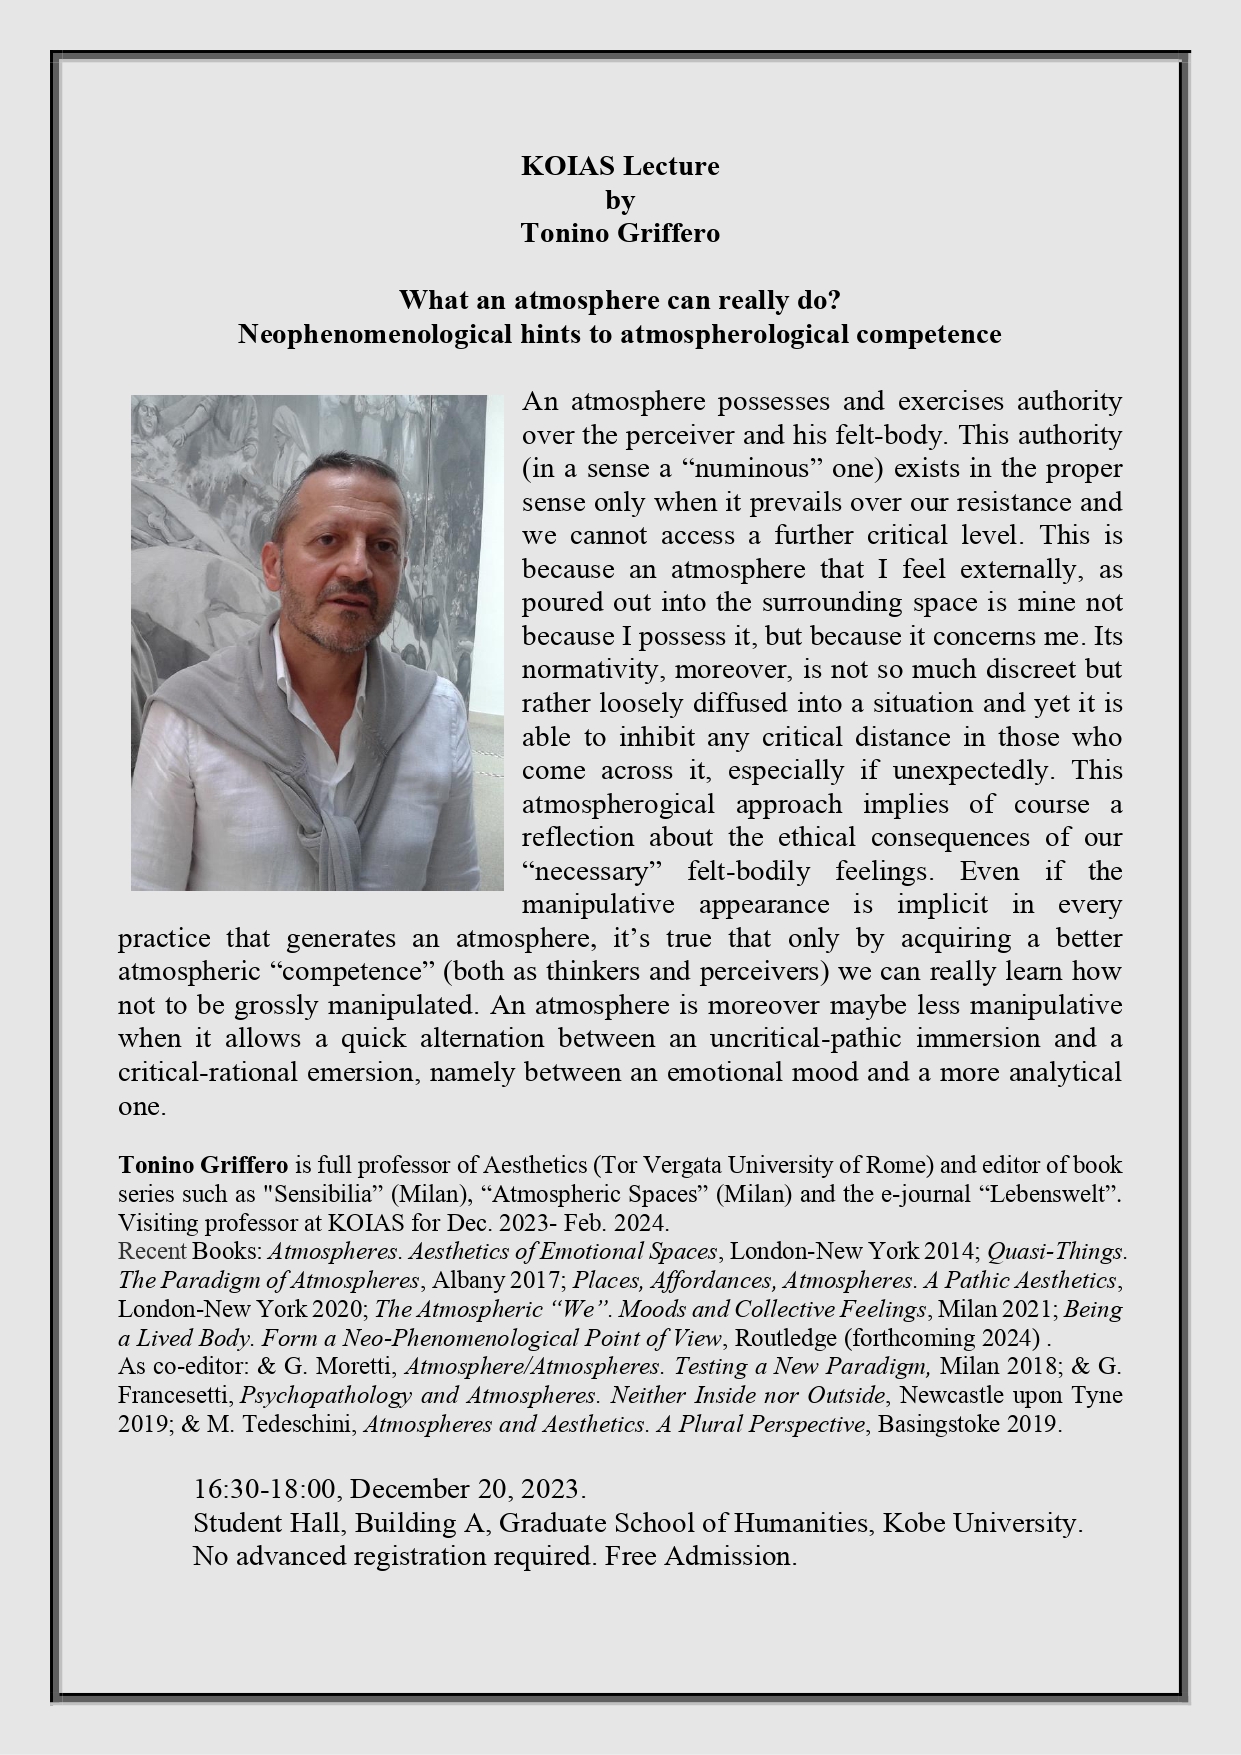 KOIAS Lecture by Tonino Griffero